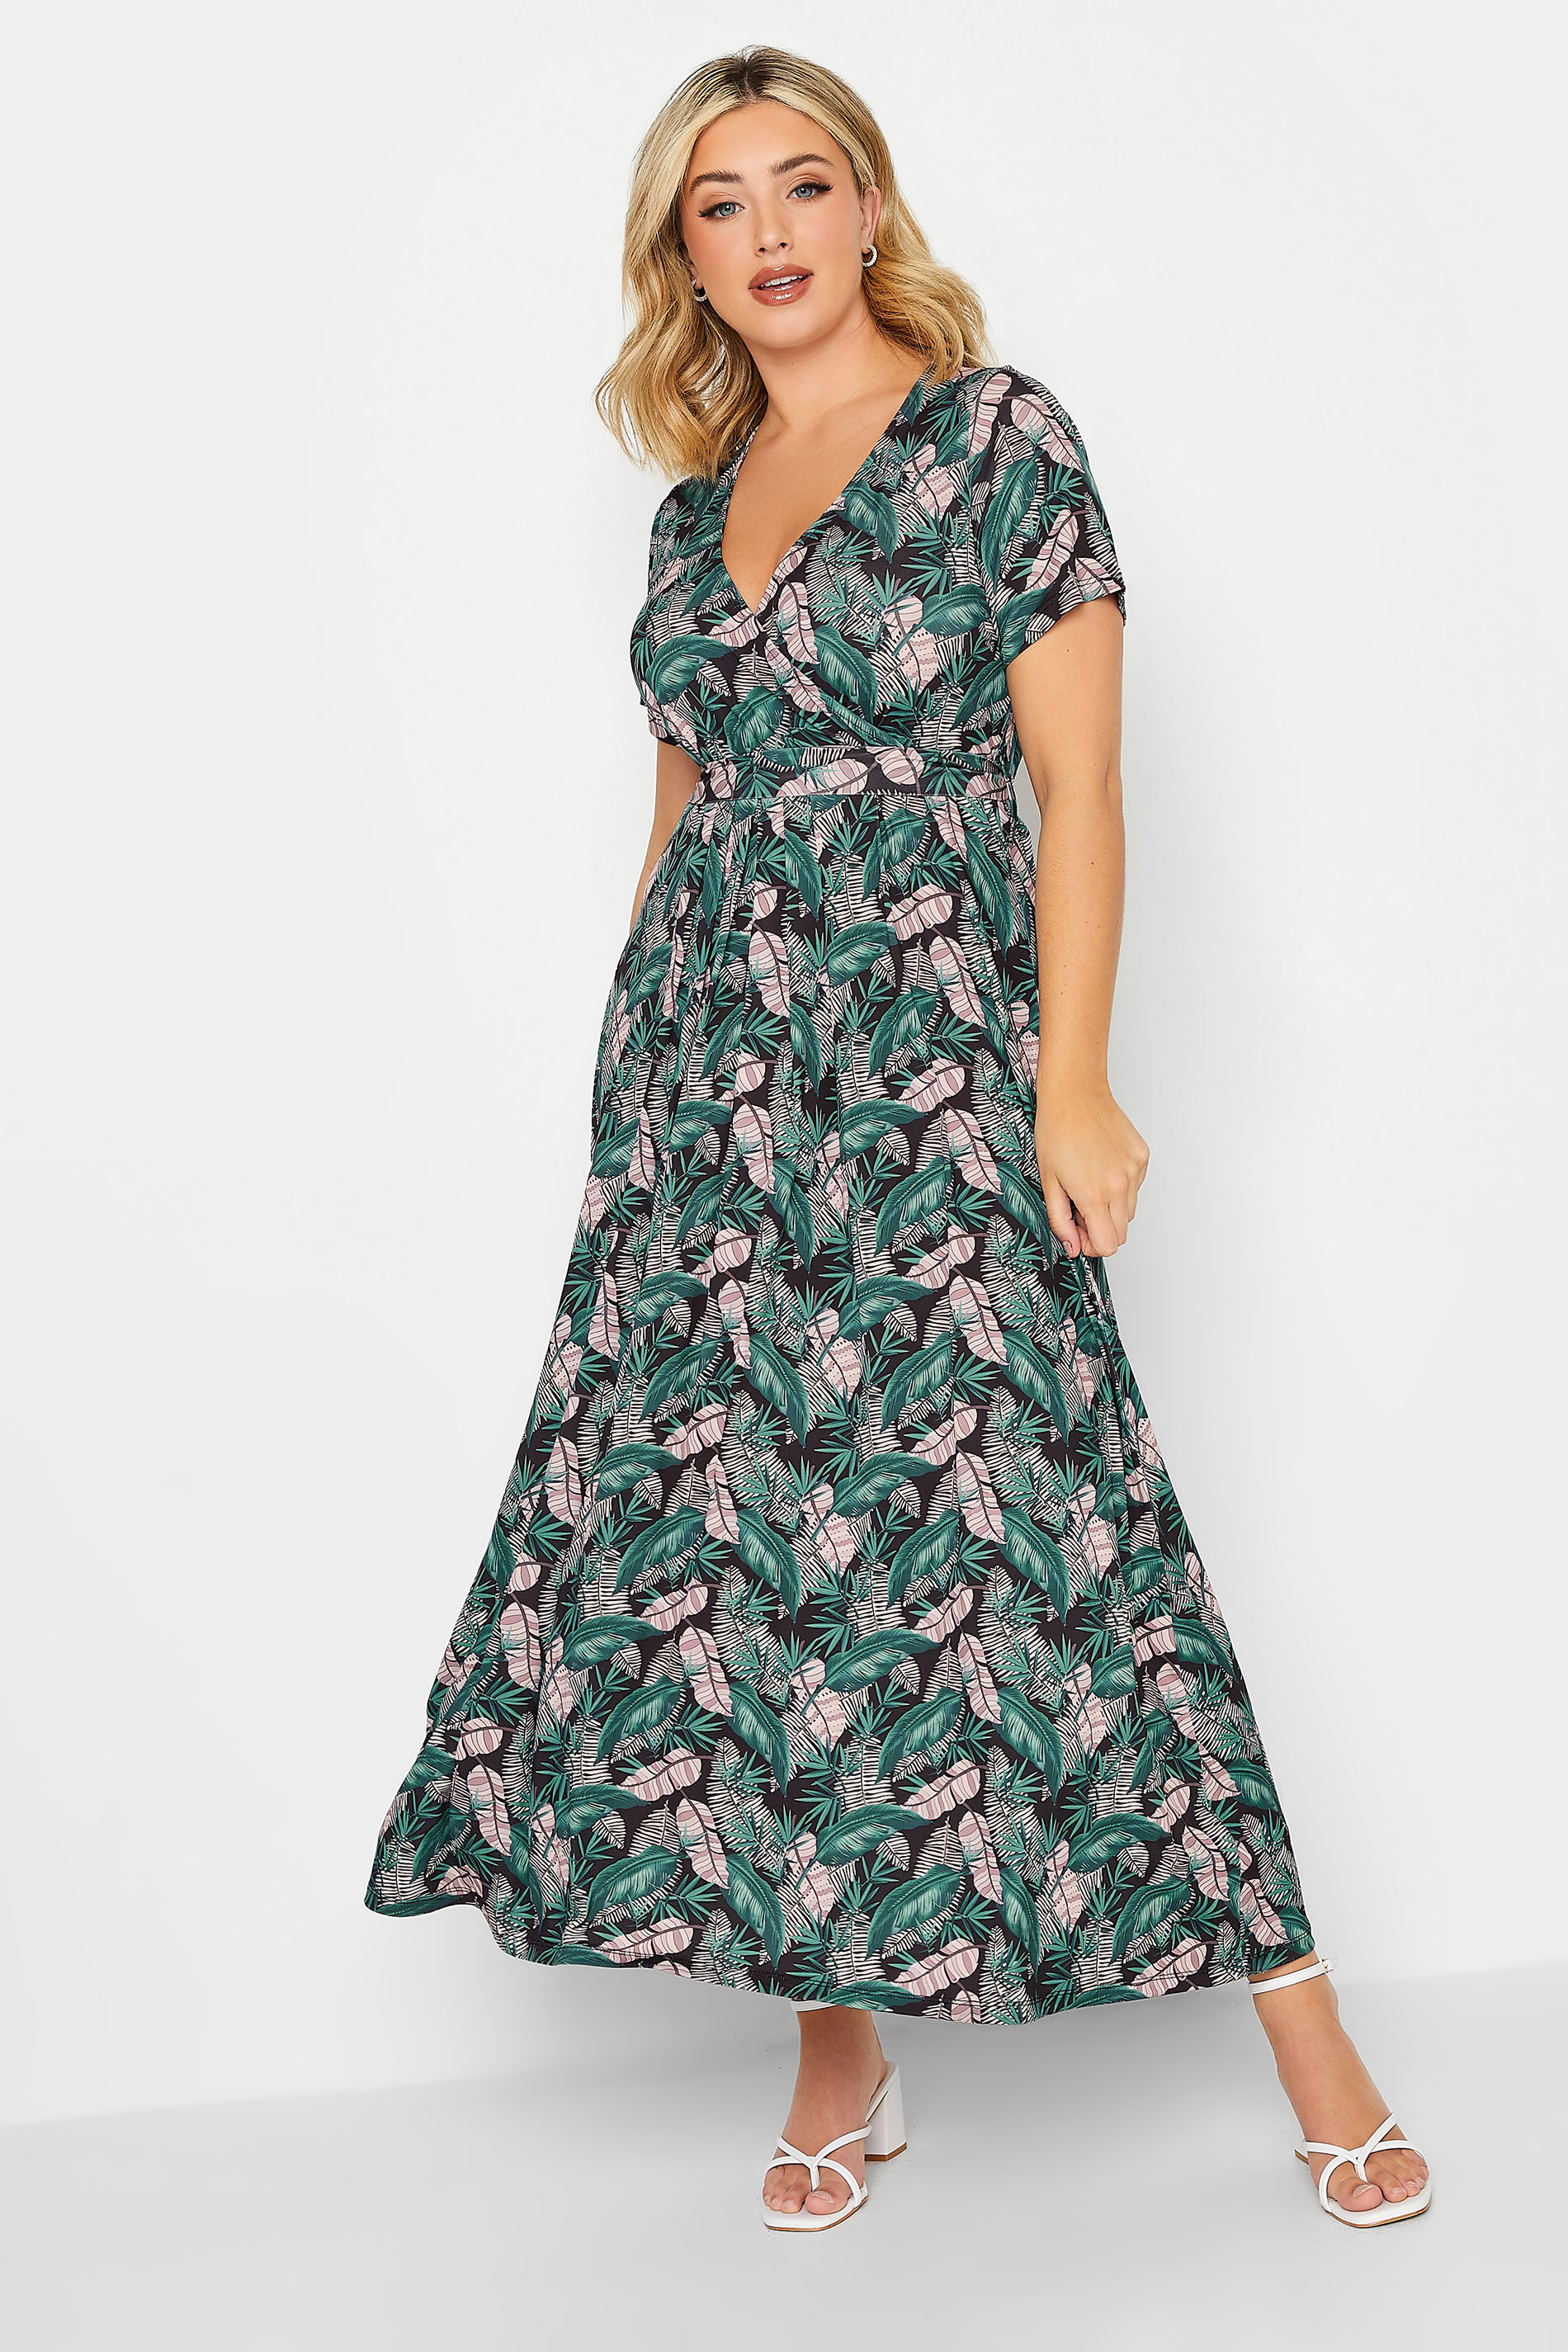 YOURS Curve Plus Size Black Leaf Print Maxi Wrap Dress | Yours Clothing  1